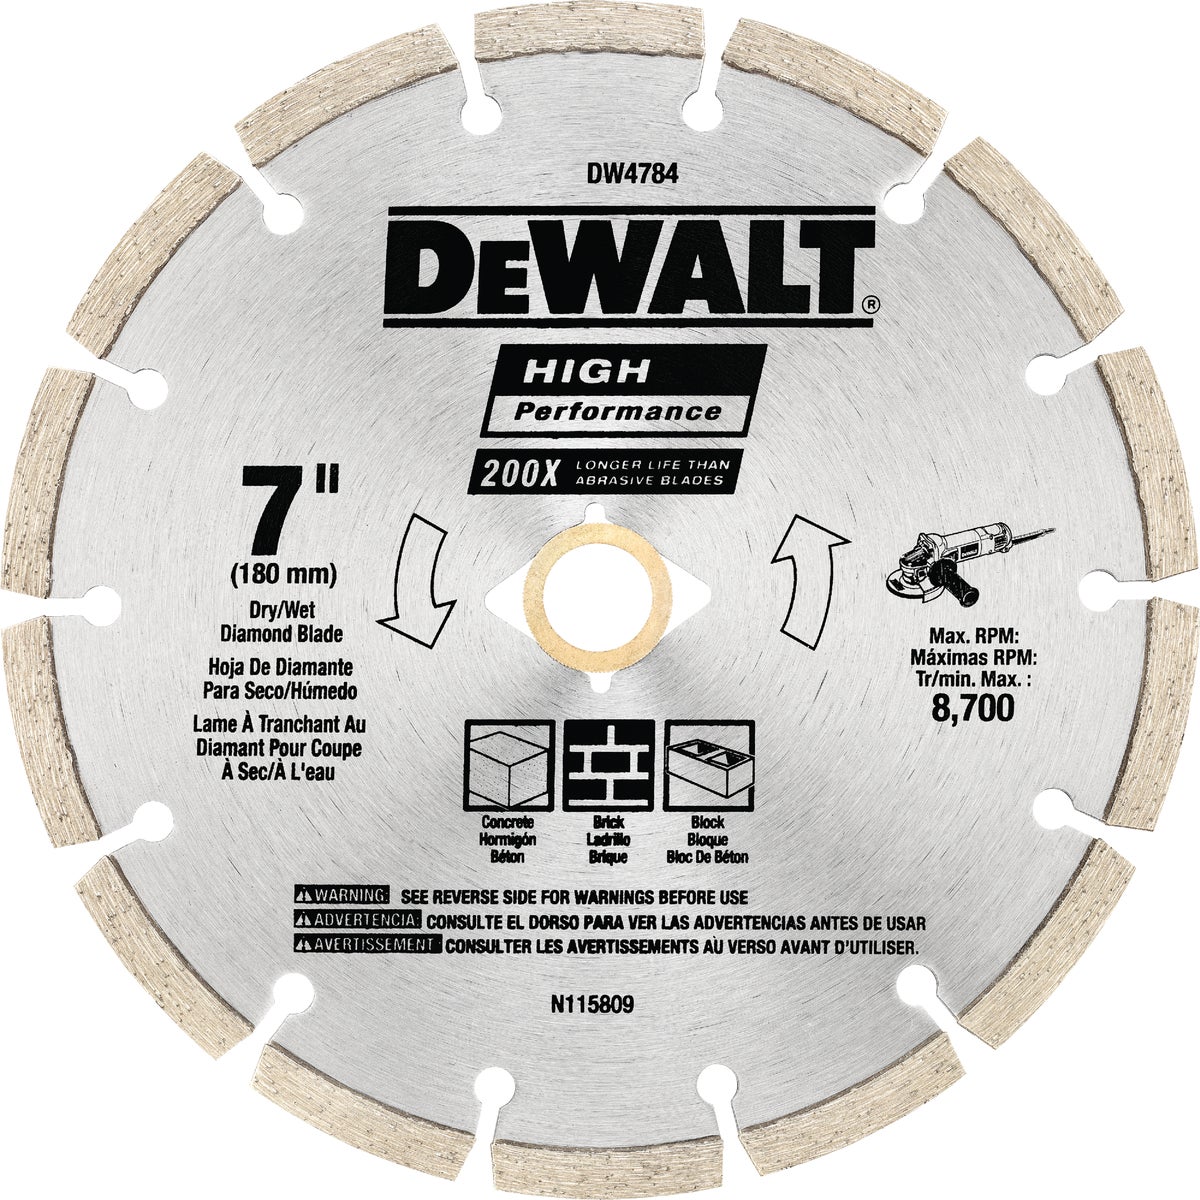 DEWALT High Performance 7 In. Segmented Rim Dry/Wet Cut Diamond Blade